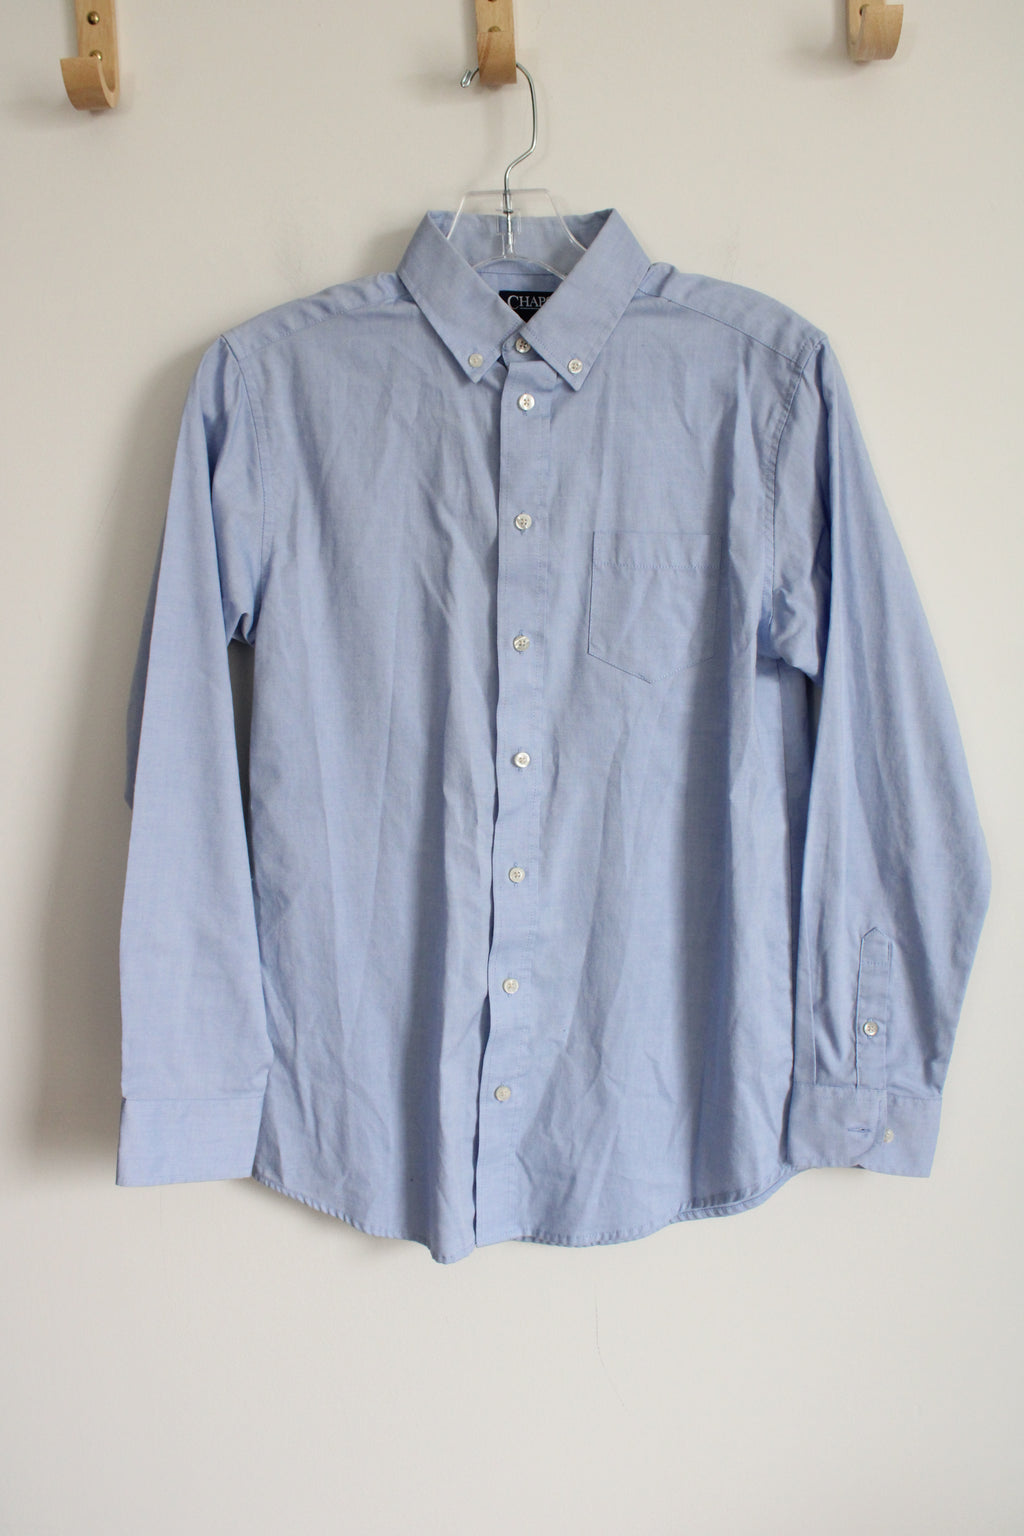 Chaps Blue Button Down Shirt | 16